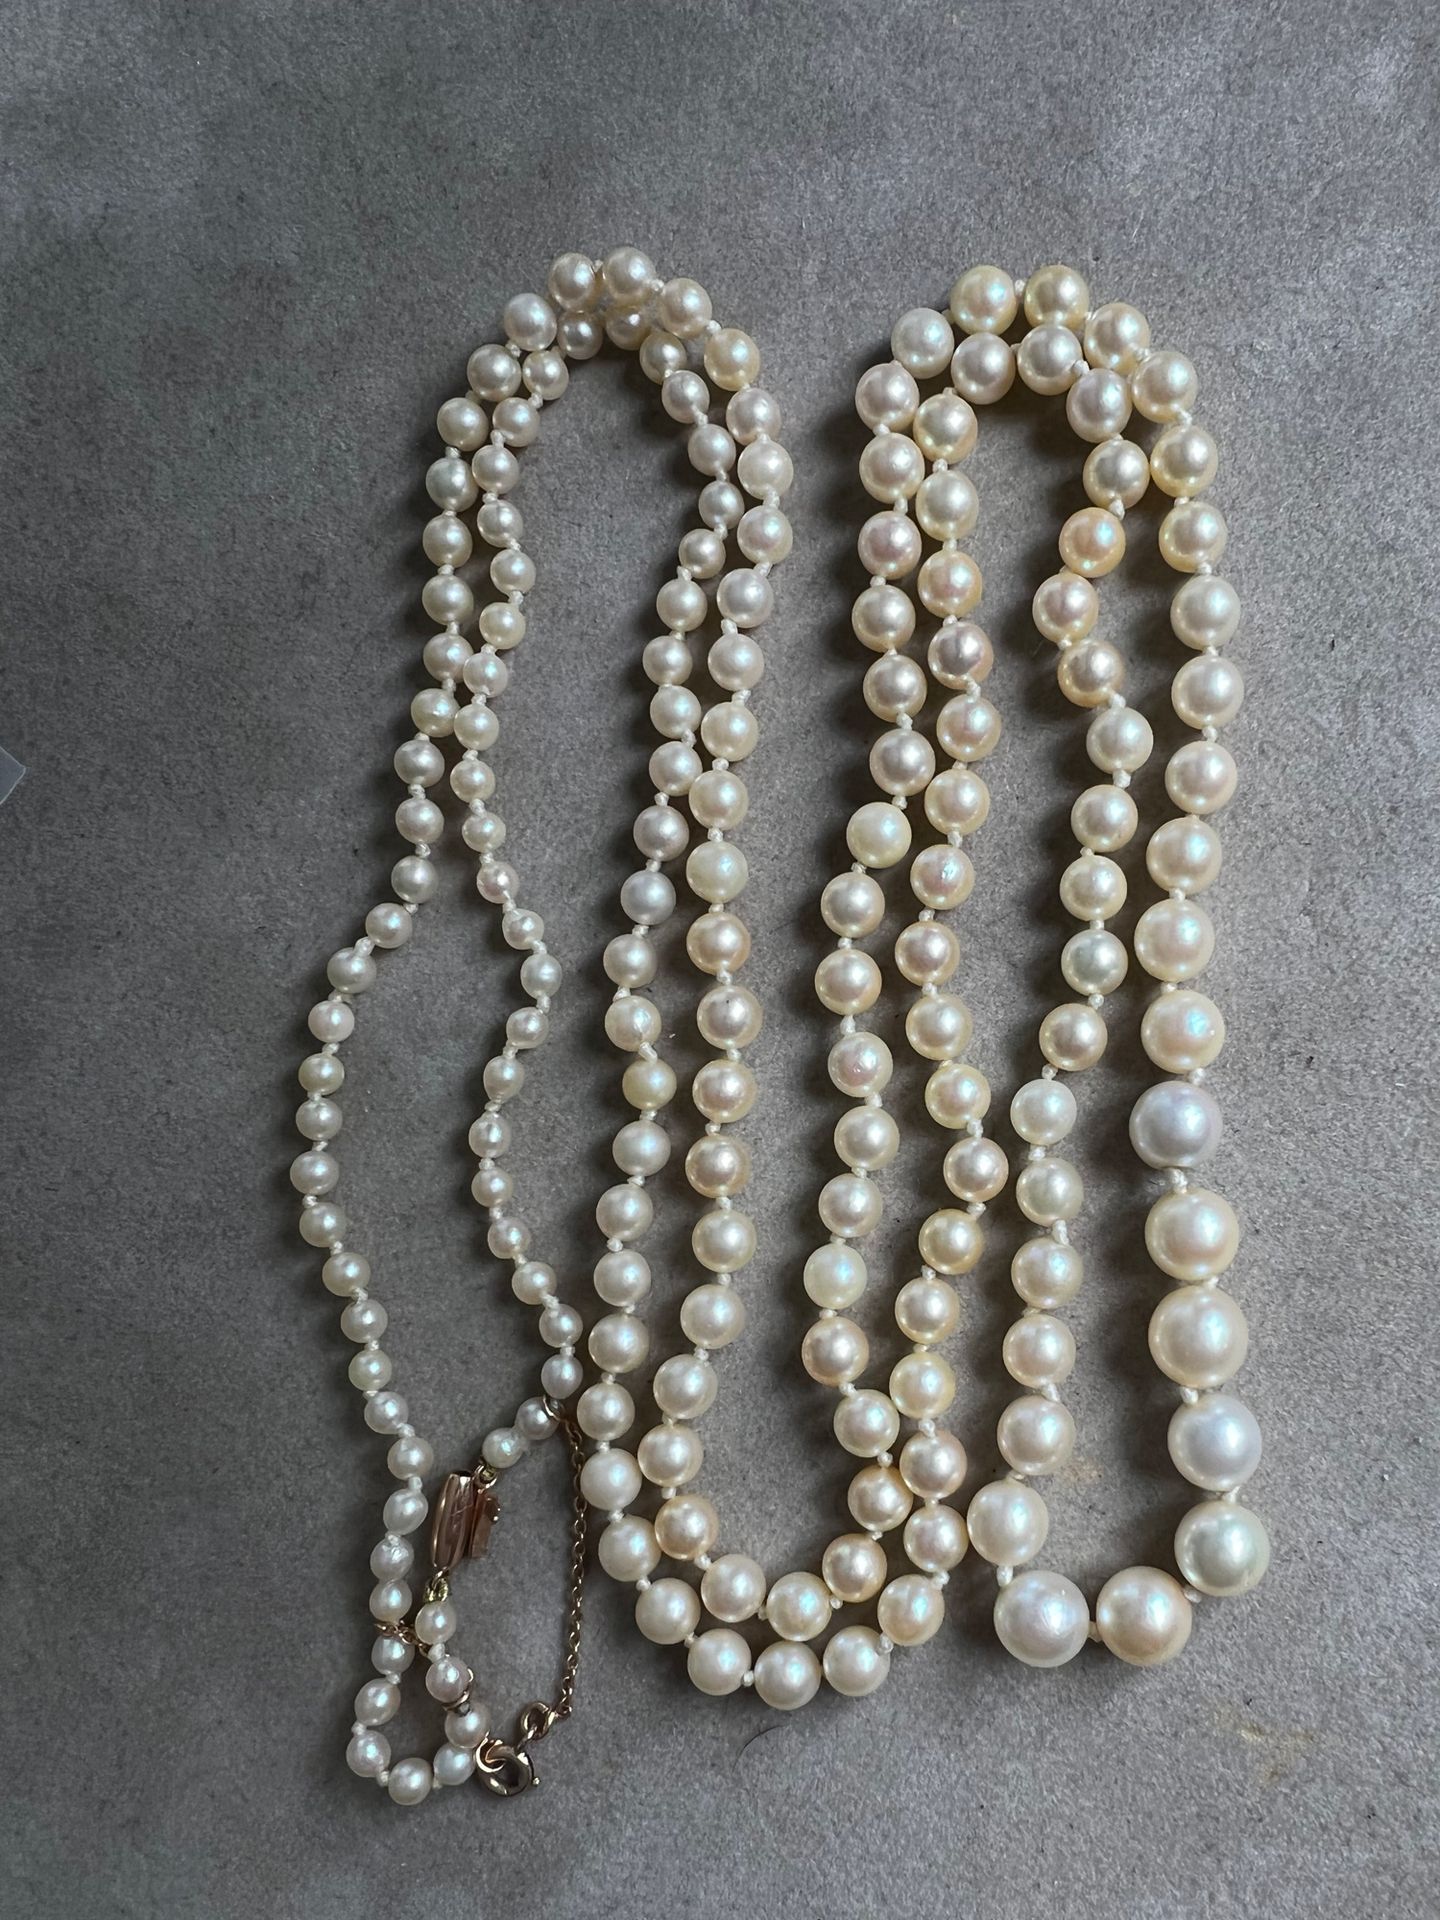 Null 由养殖珍珠（约7至3毫米）制成的长项链。750金的橄榄扣和安全链。
长度：95 cm
毛重：27.3 g